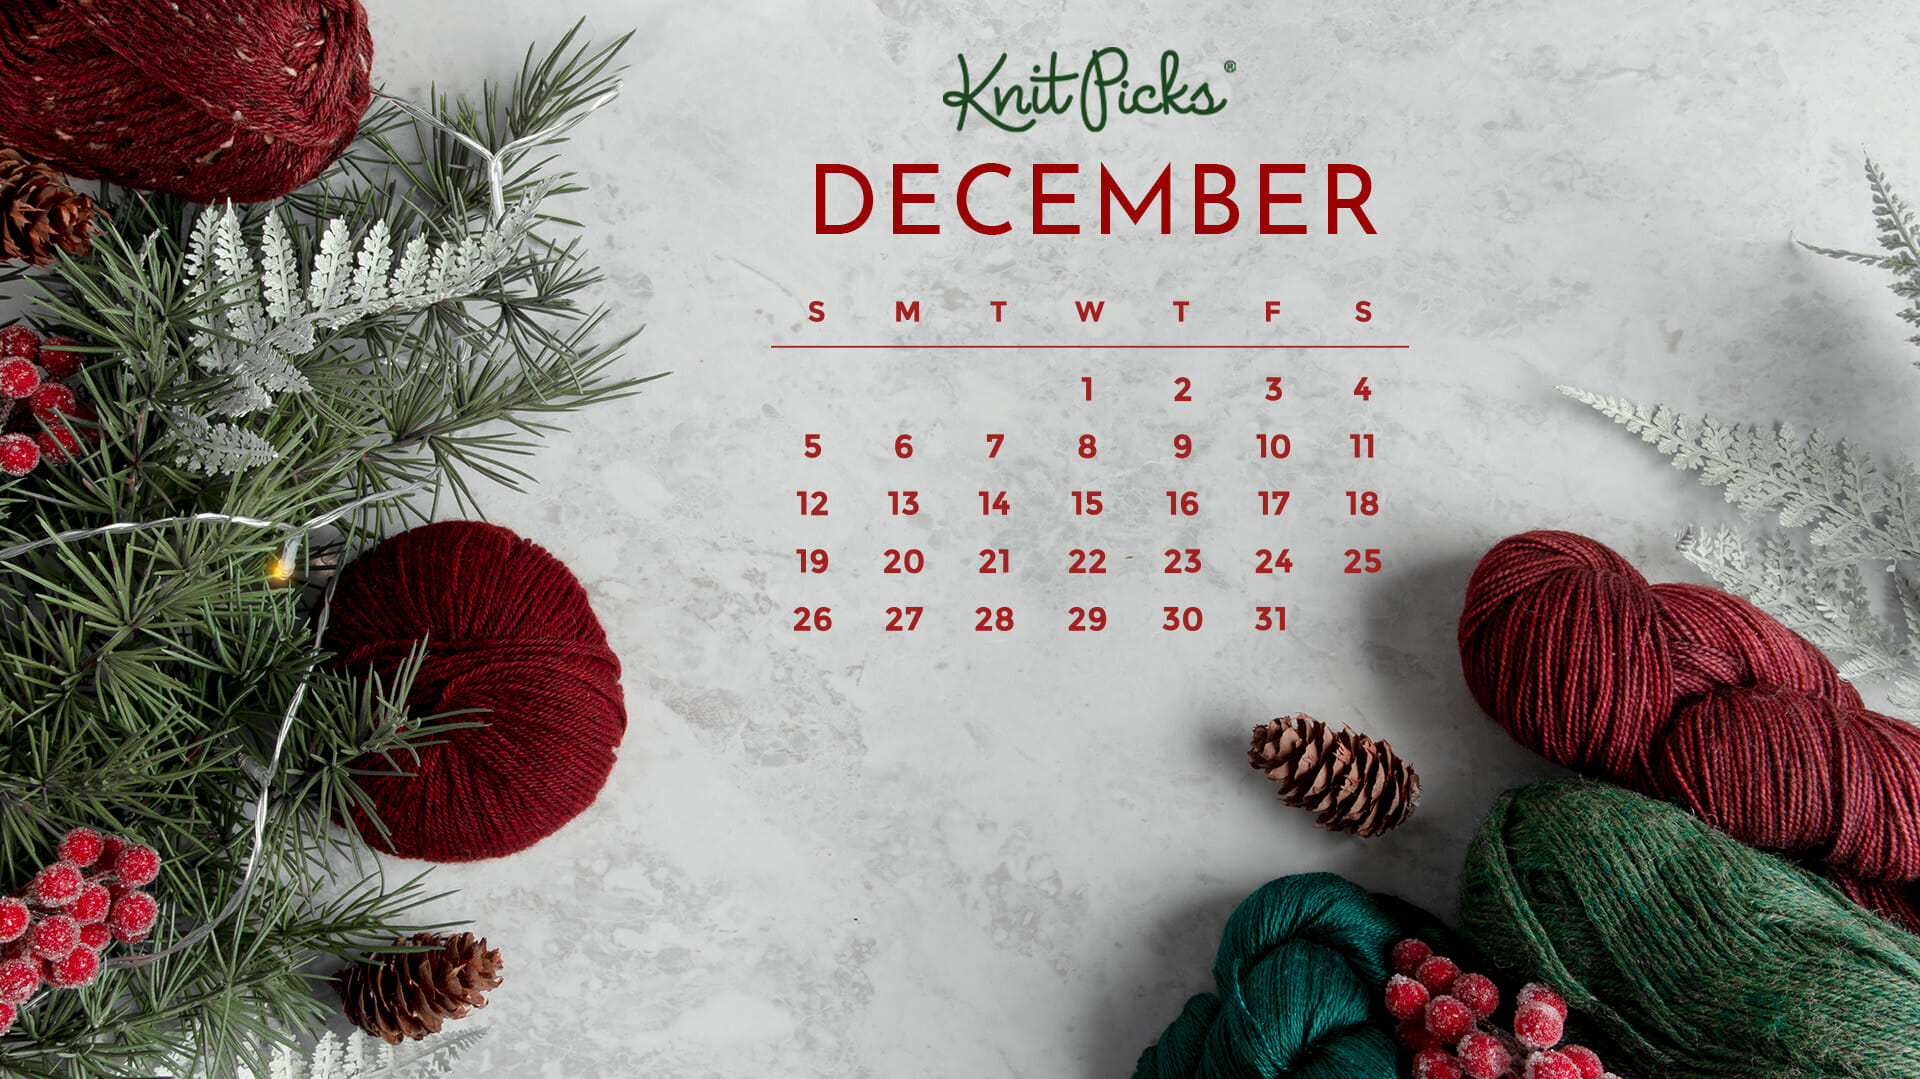 Free Downloadable December 21 Calendar Knitpicks Staff Knitting Blog